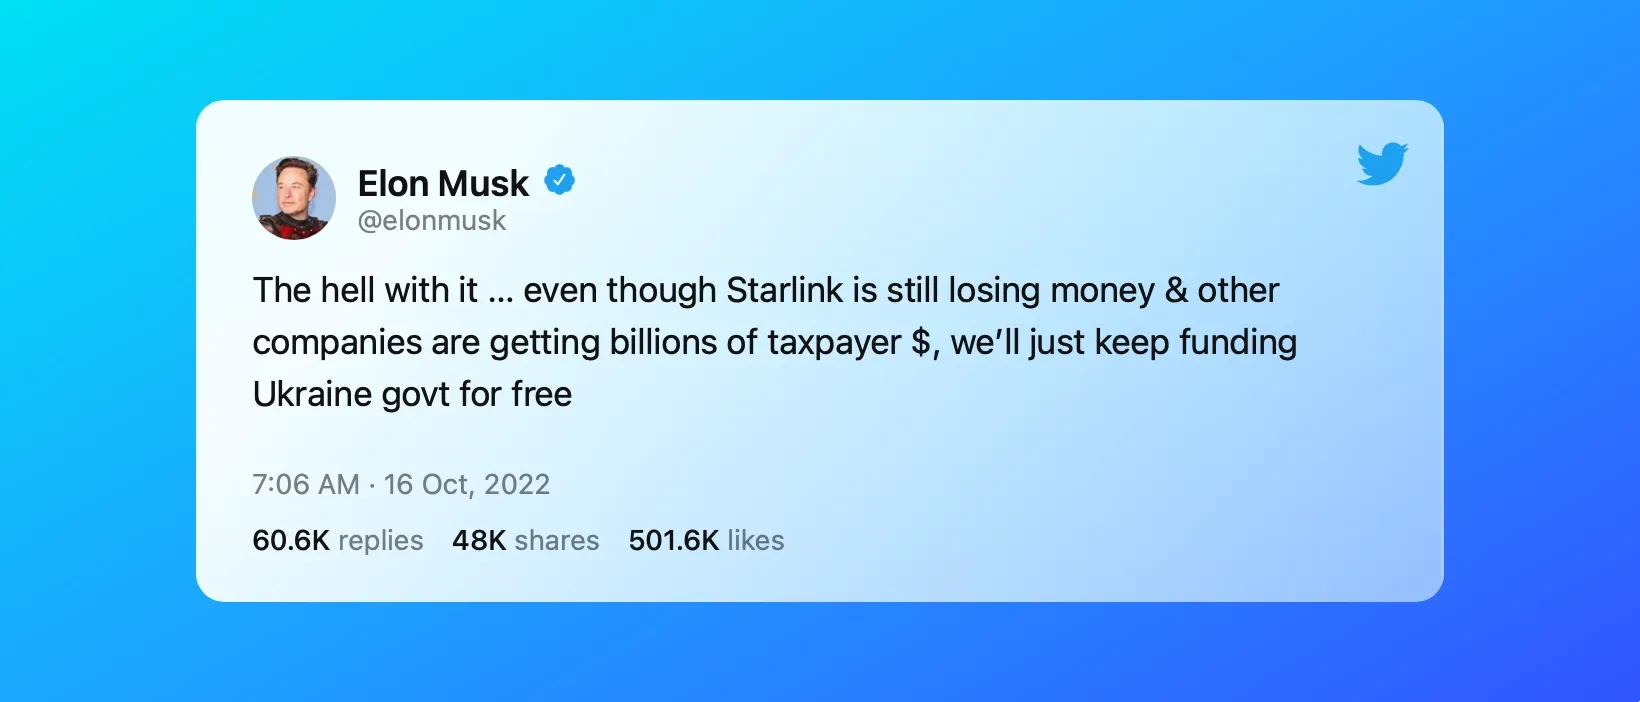 Starlink losing money - Elon Musk tweet. 